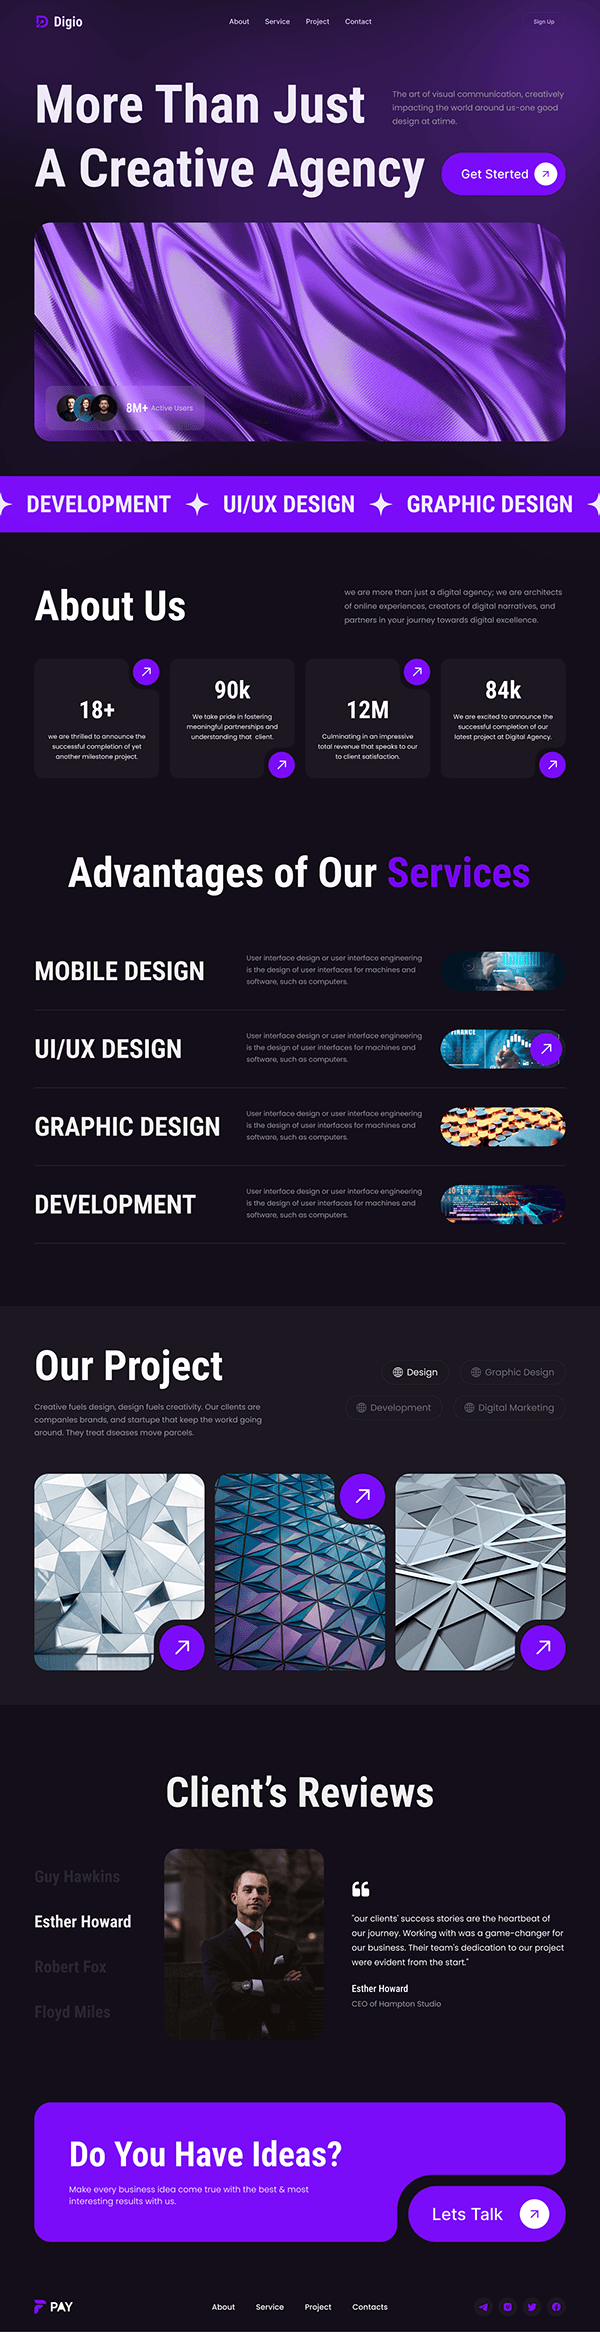 Marketing Agency Landing Page | Website Design